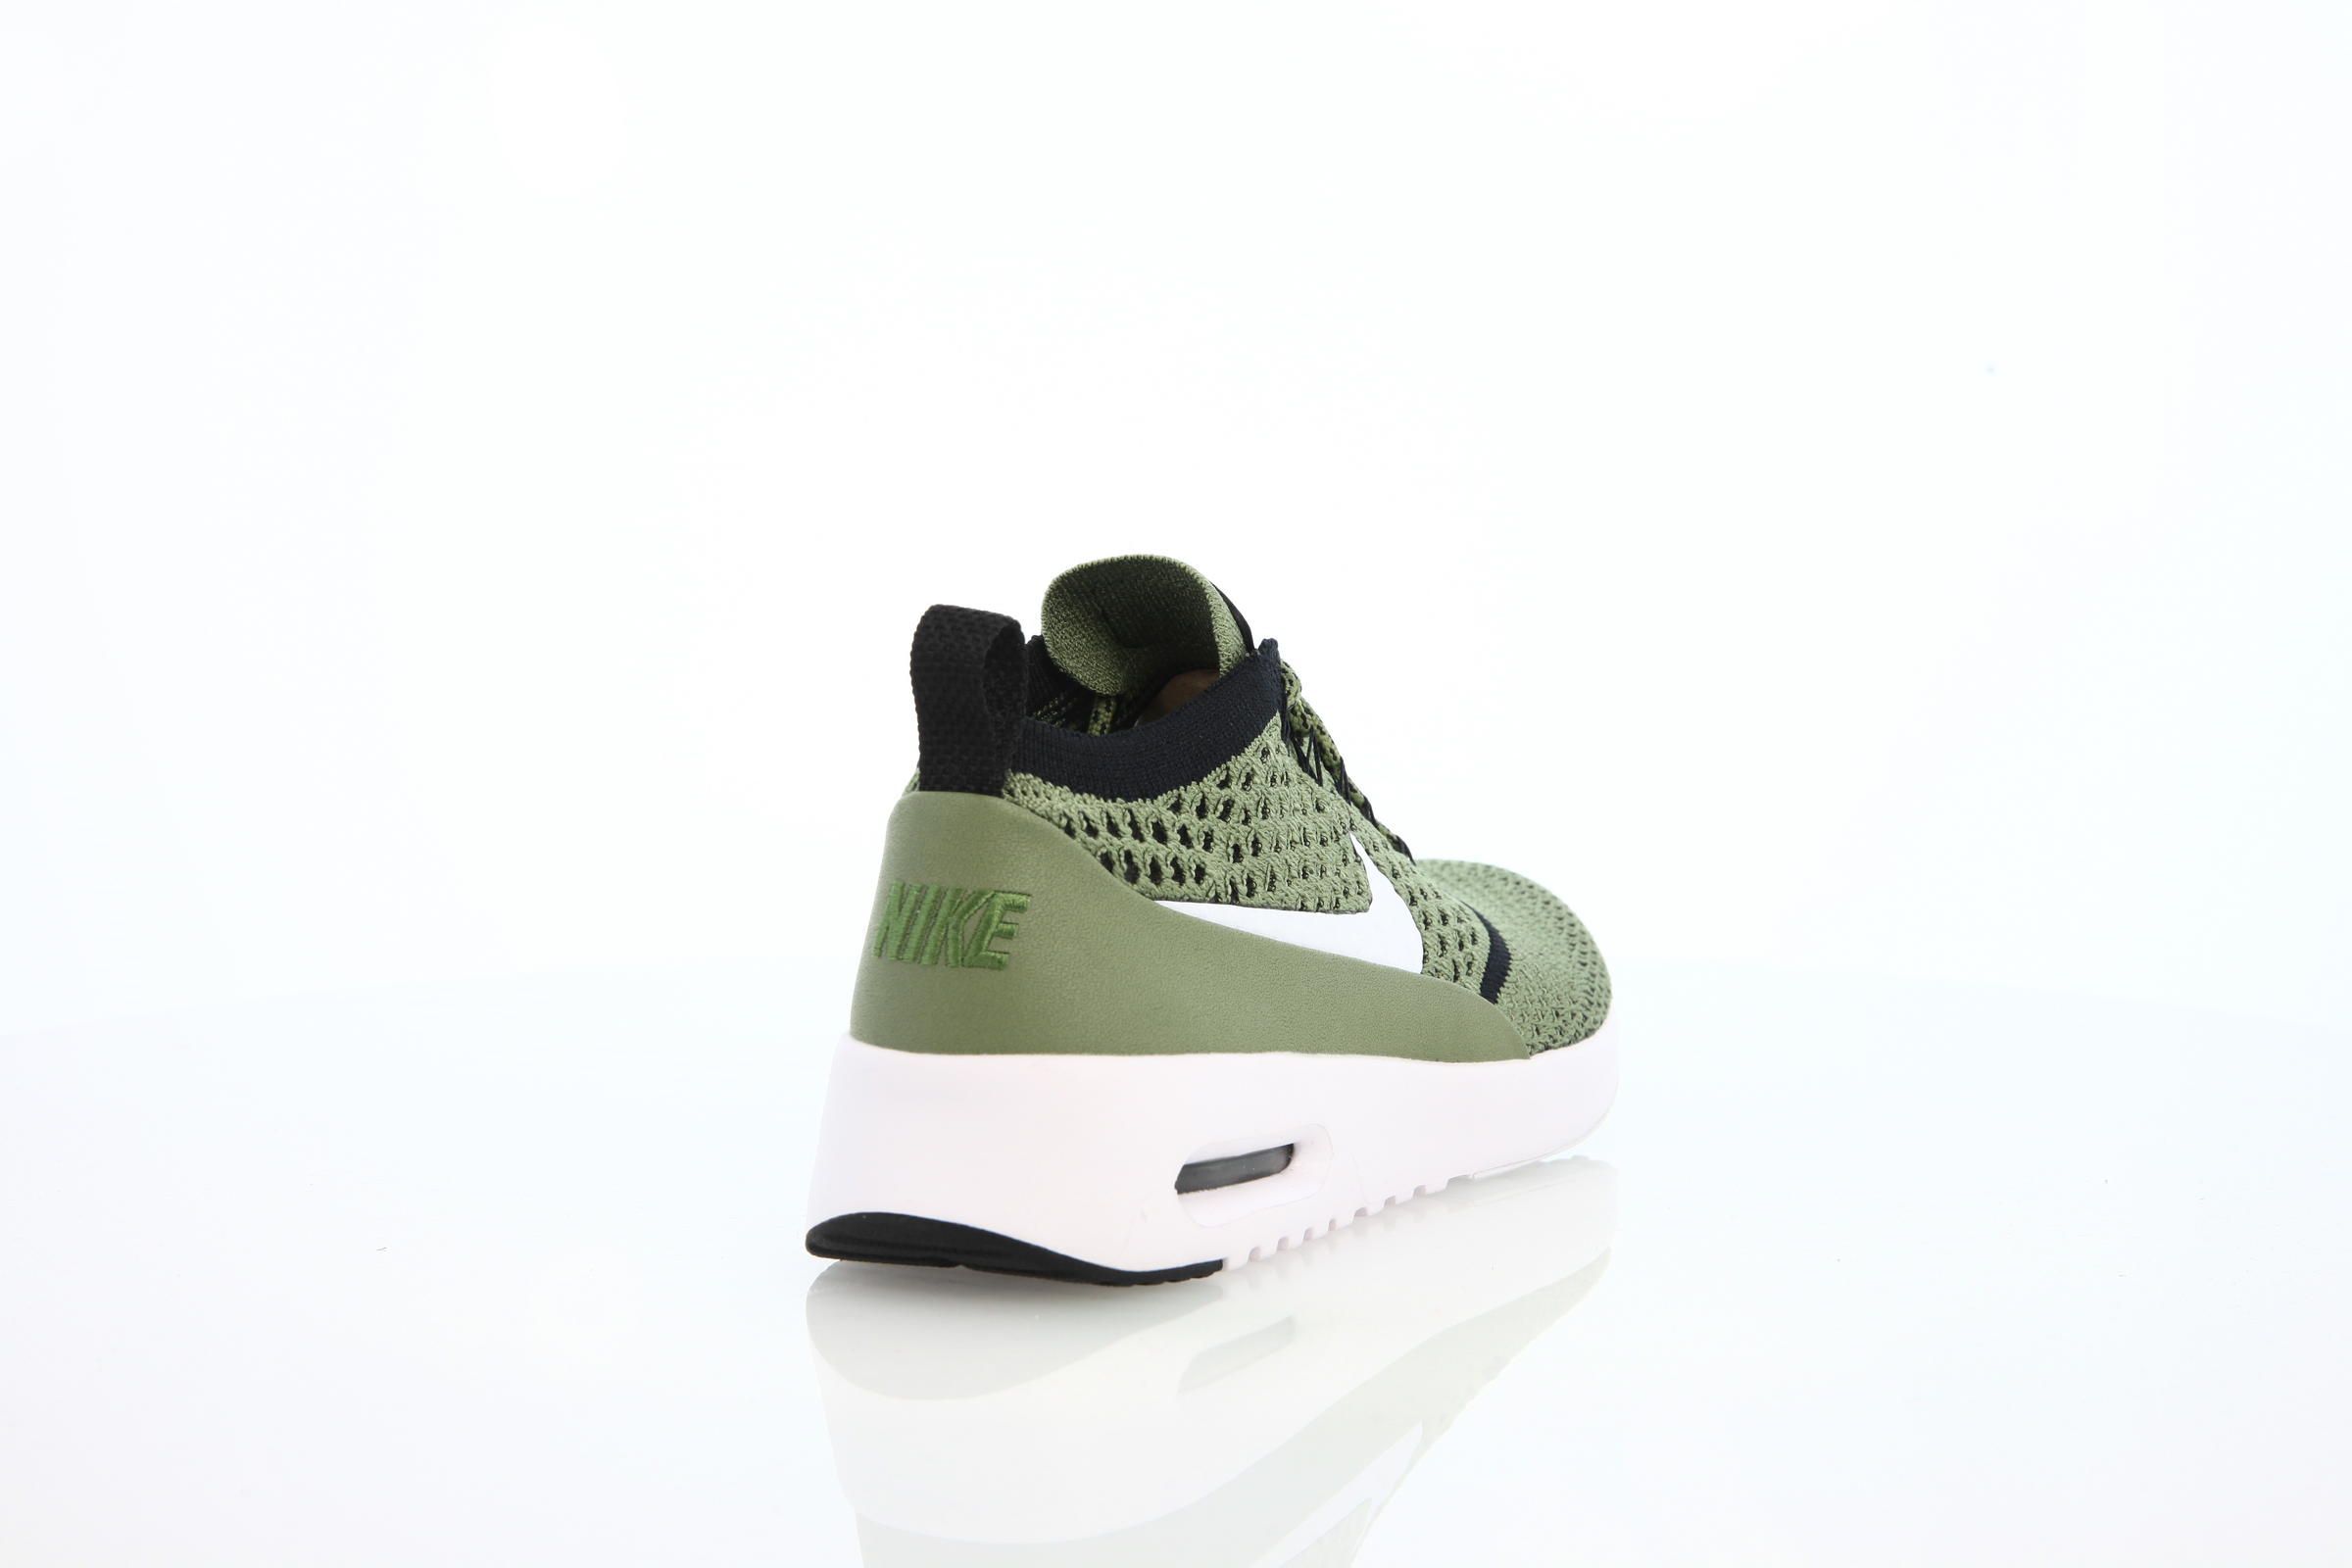 Nike W Air Max Thea Ultra Flyknit "Palm Green"